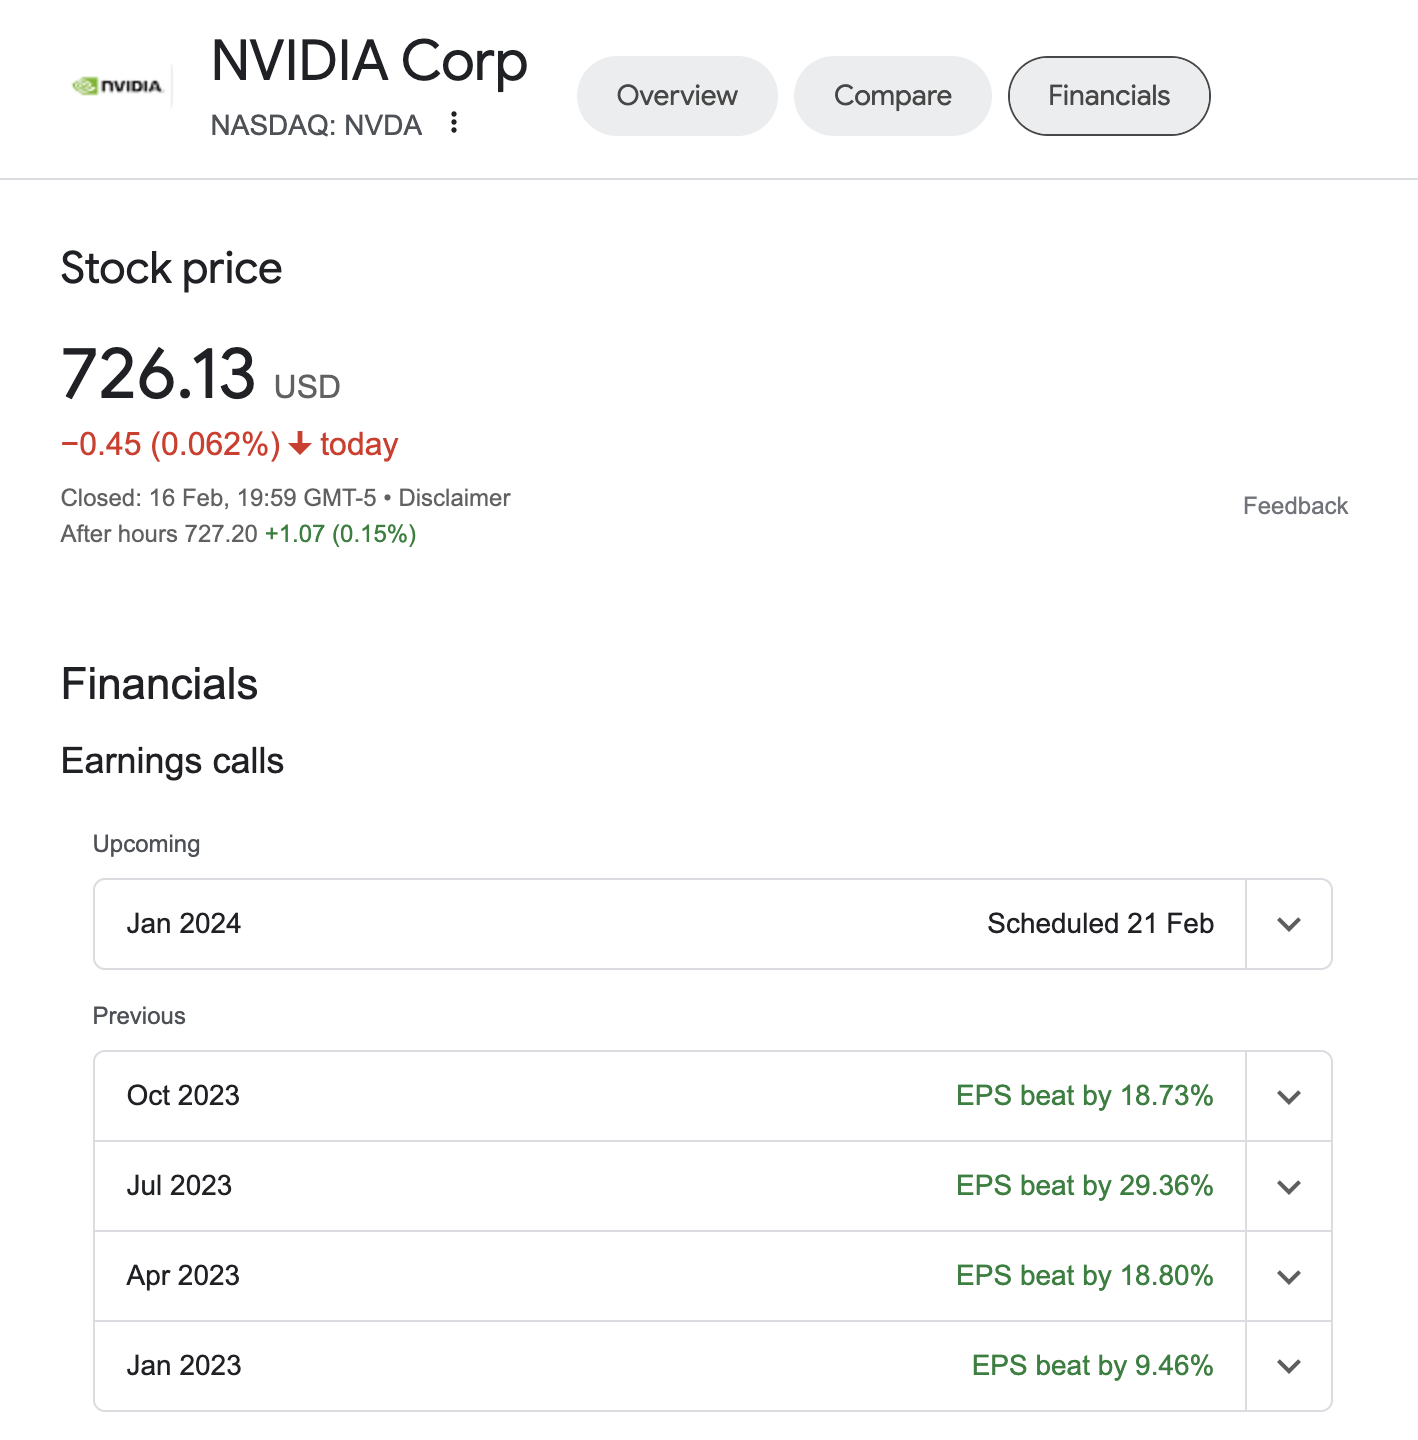 NVIDIA Corp (NVDA) Earnings Calls | January 2023 - January 2024